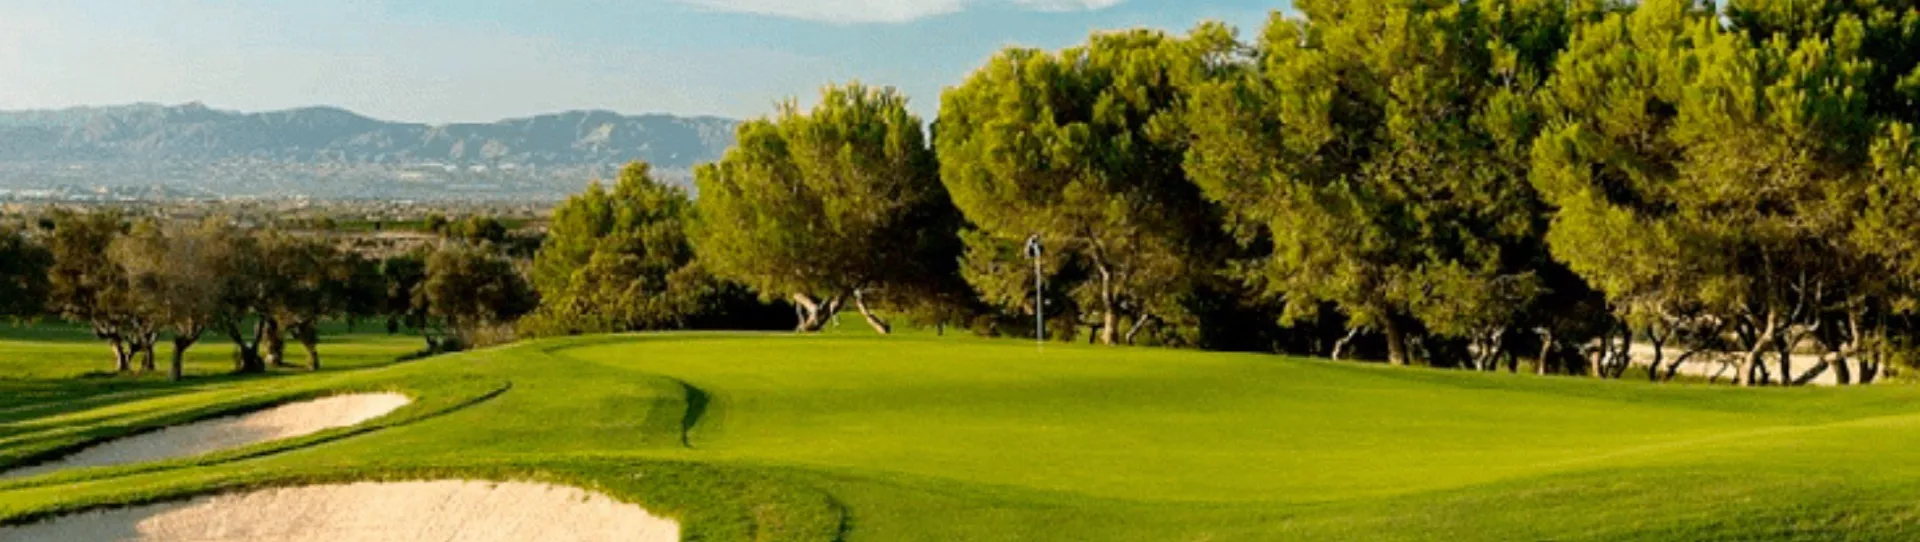 Spain golf courses - Ifach Golf Course - Photo 1